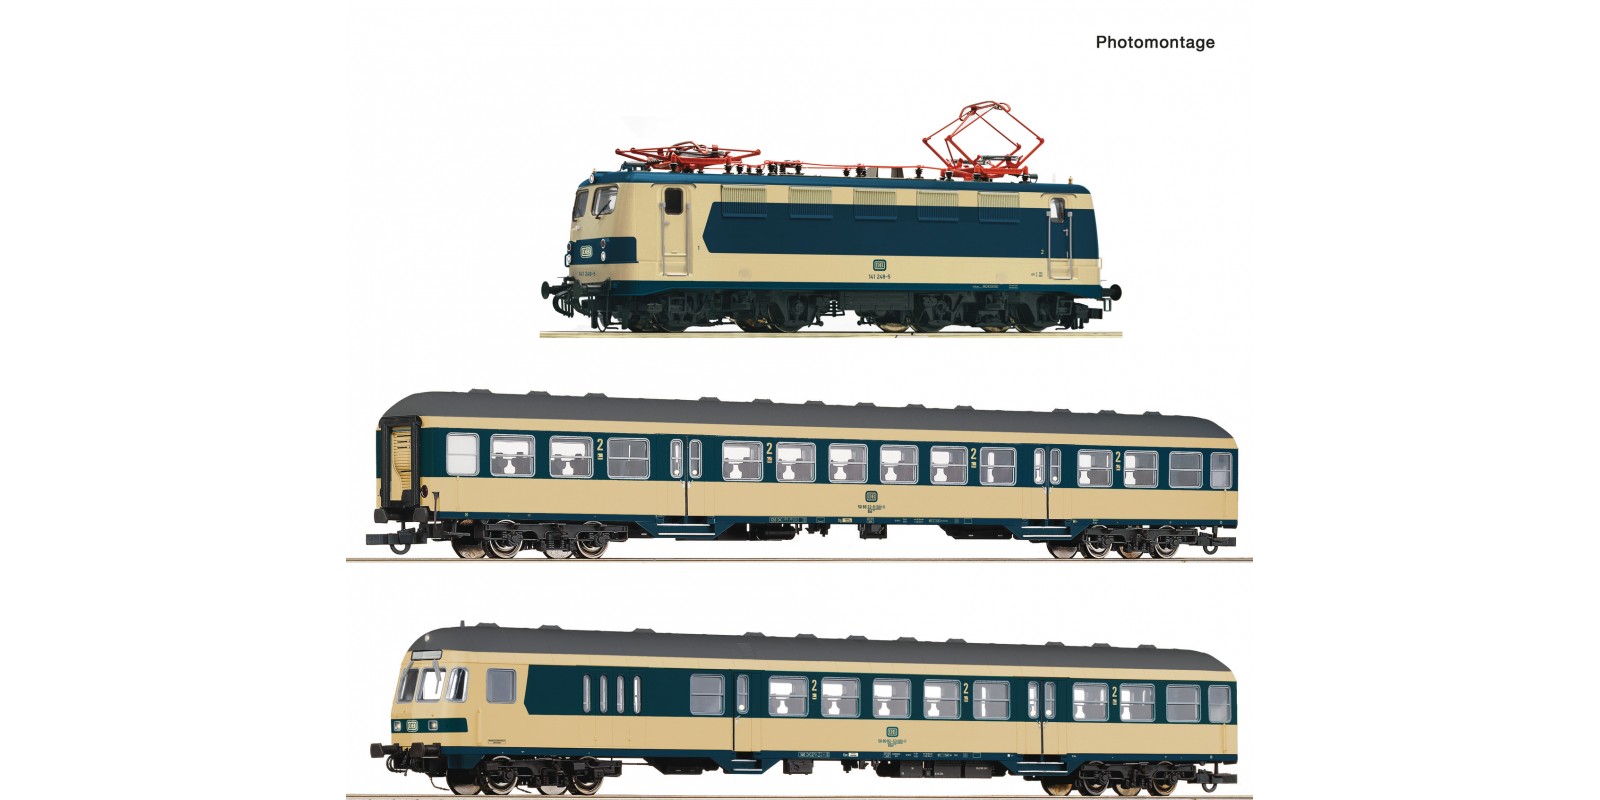 RO61484 3 piece set: The Karlsruhe train